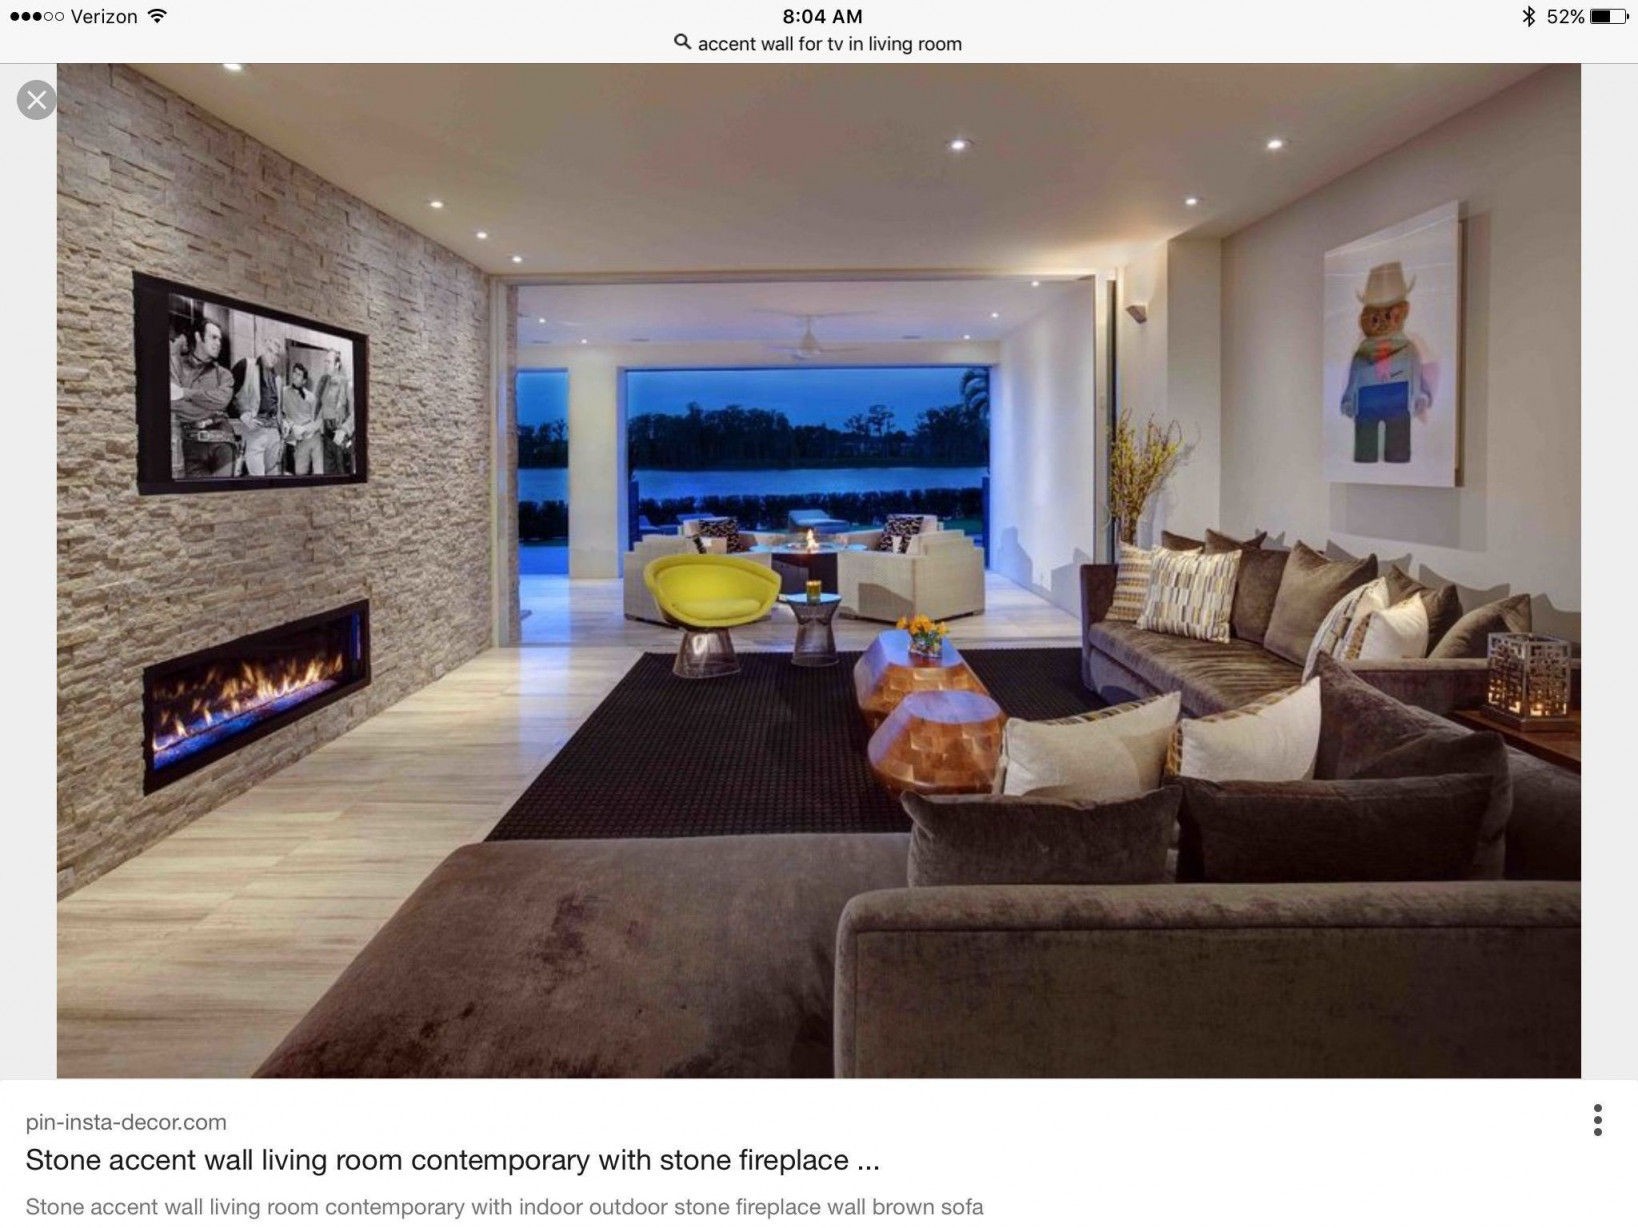 Indoor Fireplace Tv Stand Elegant Tv Stand Design Belle Tv Wall Decoration Ideas Stunning